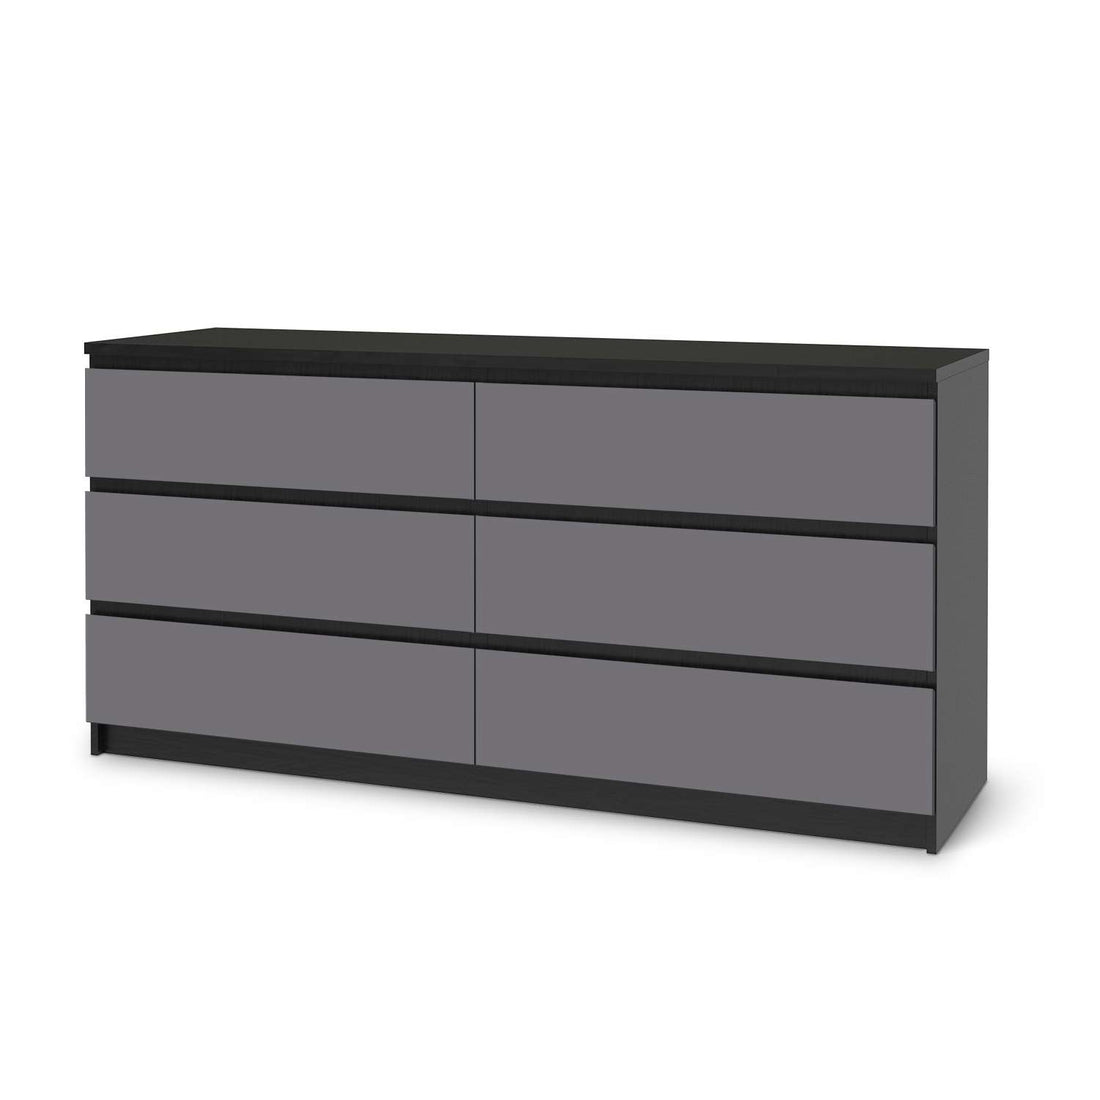 Möbelfolie Grau Light - IKEA Malm Kommode 6 Schubladen (breit) - schwarz